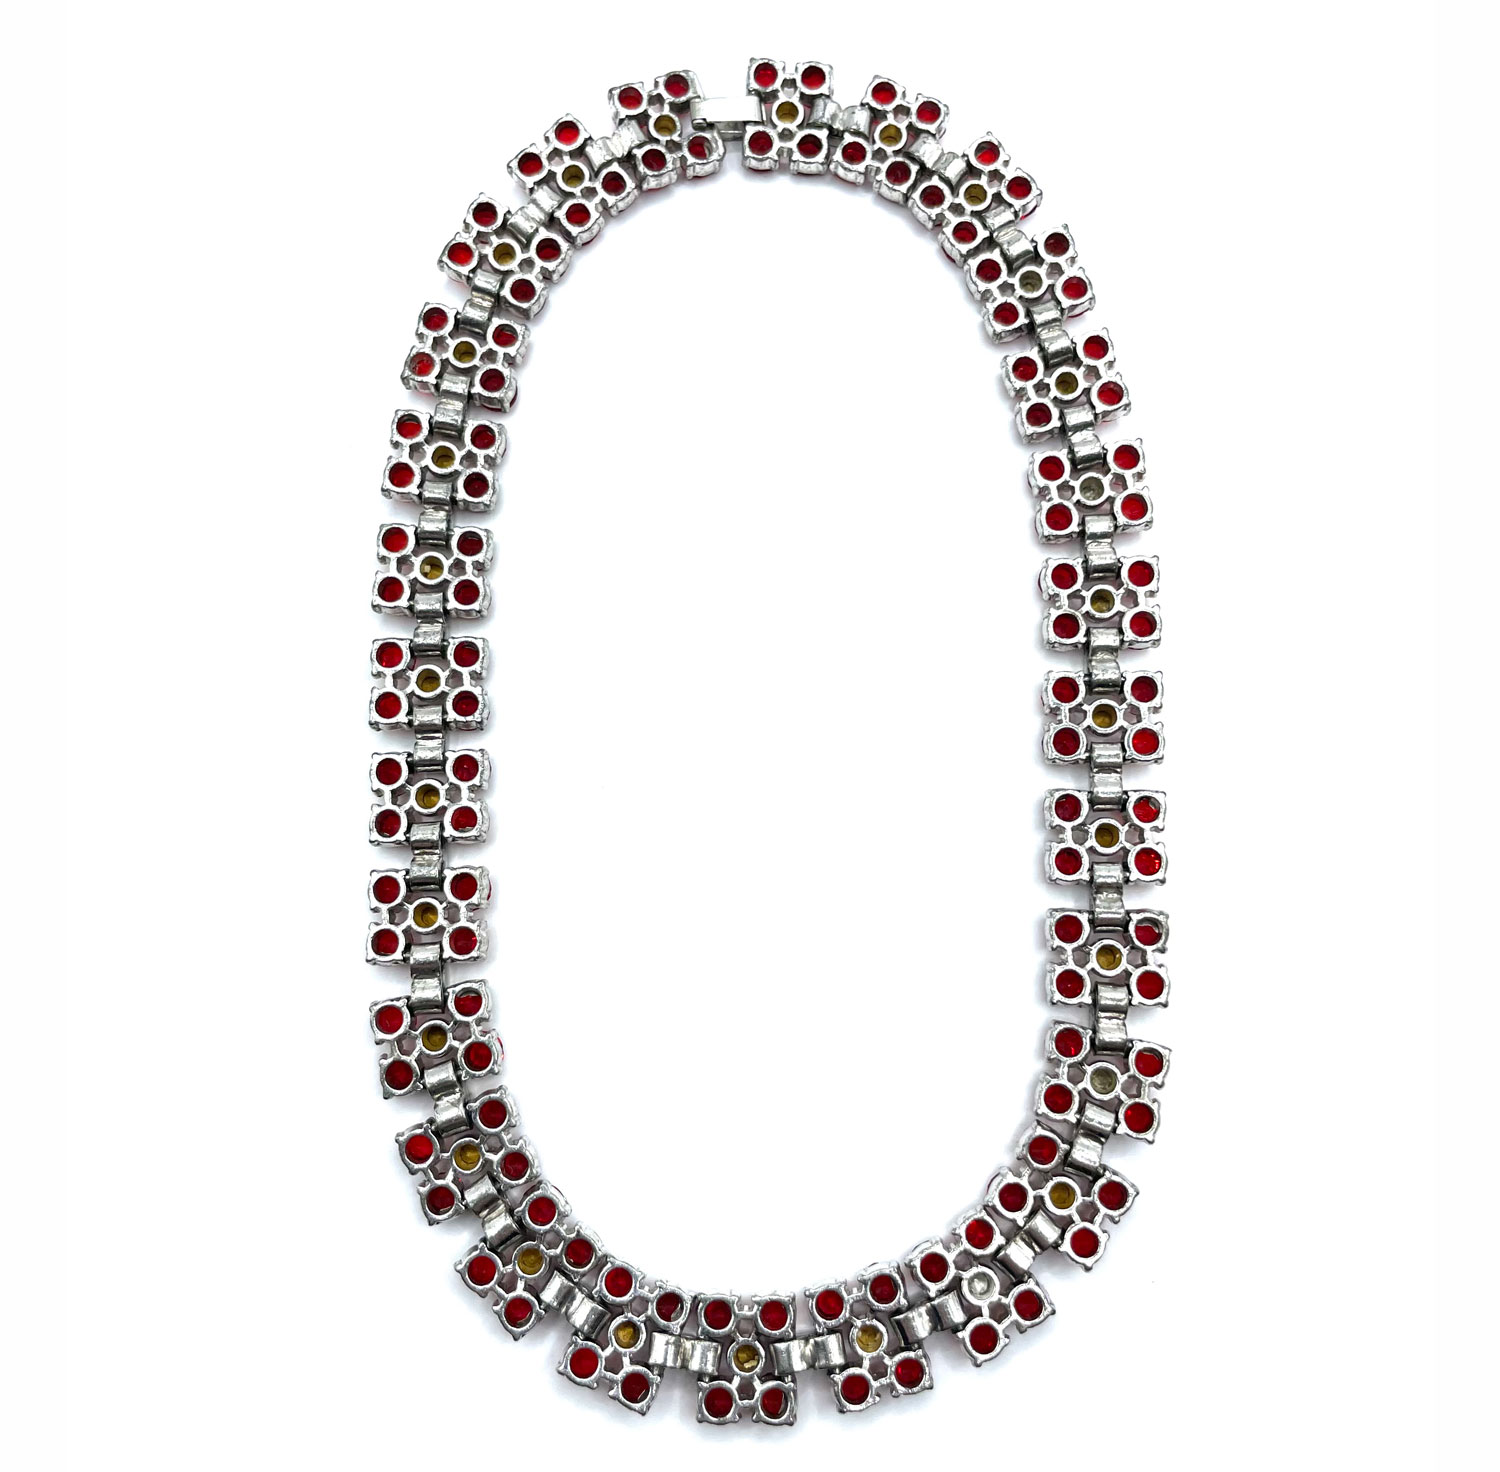 Red rhinestone necklace